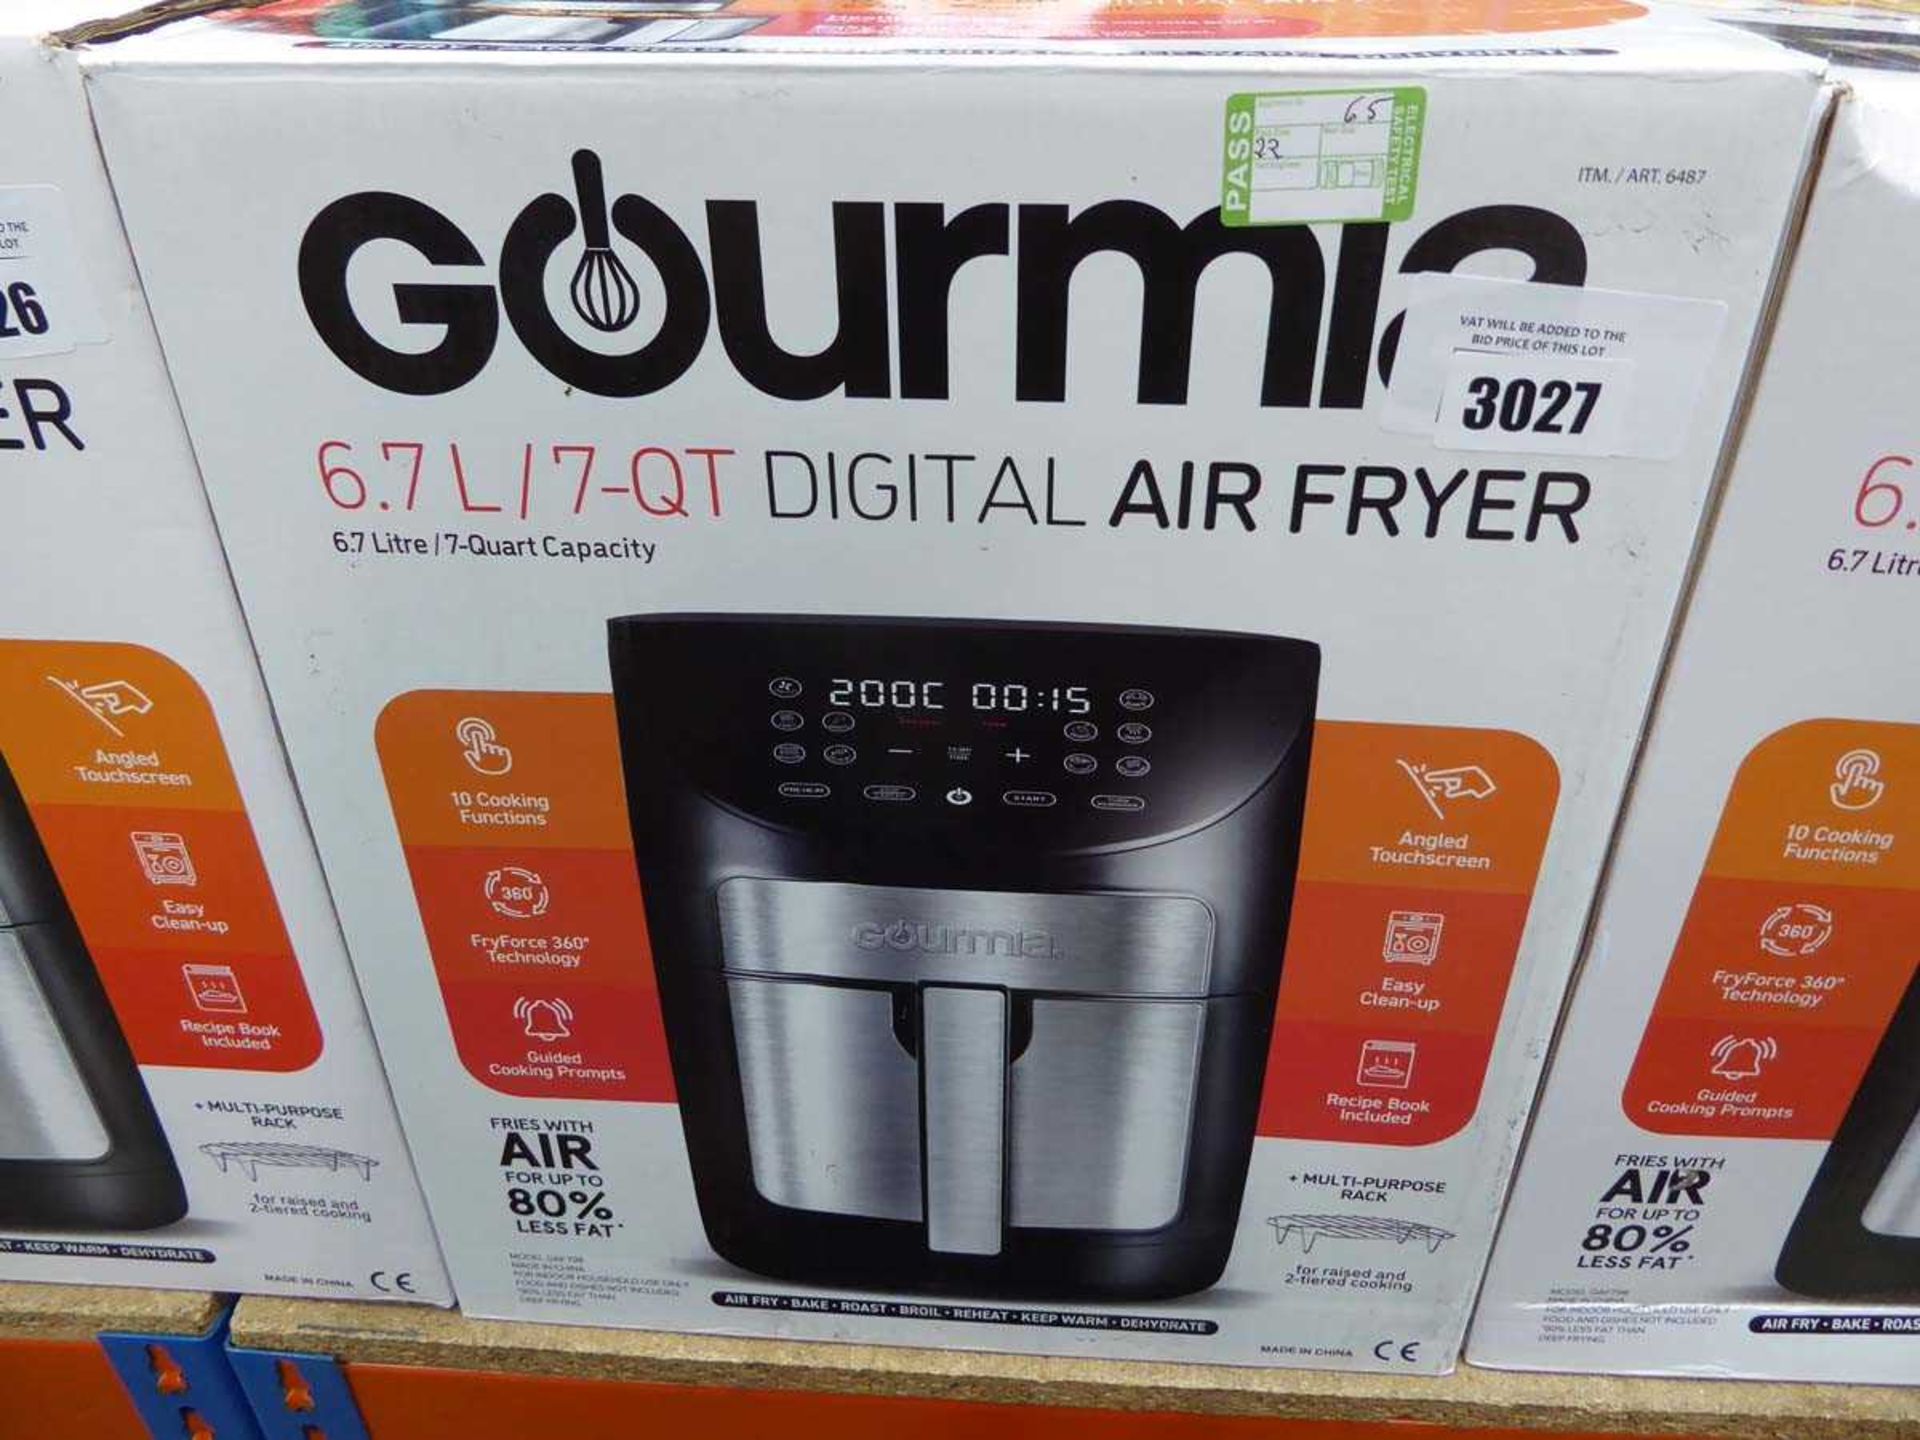 +VAT Gourmia 6.7l digital air fryer